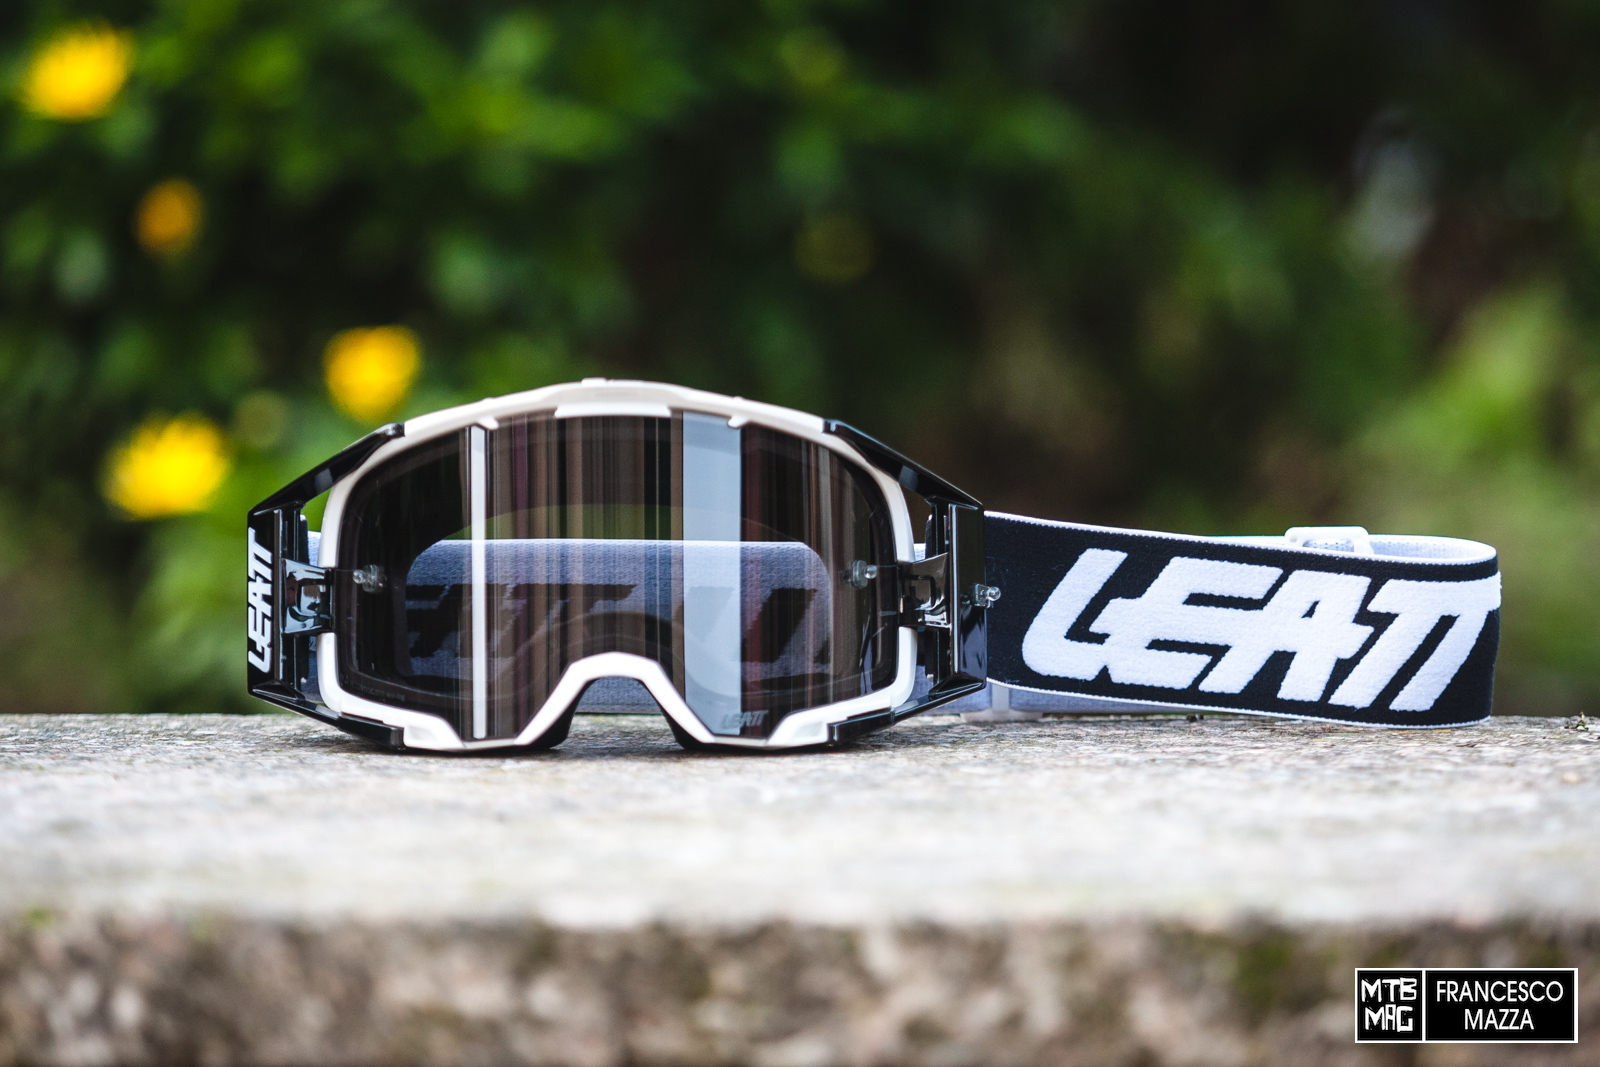 Maschera per motocross Velocity 5.5 con lenti antiappannamento 8020001040